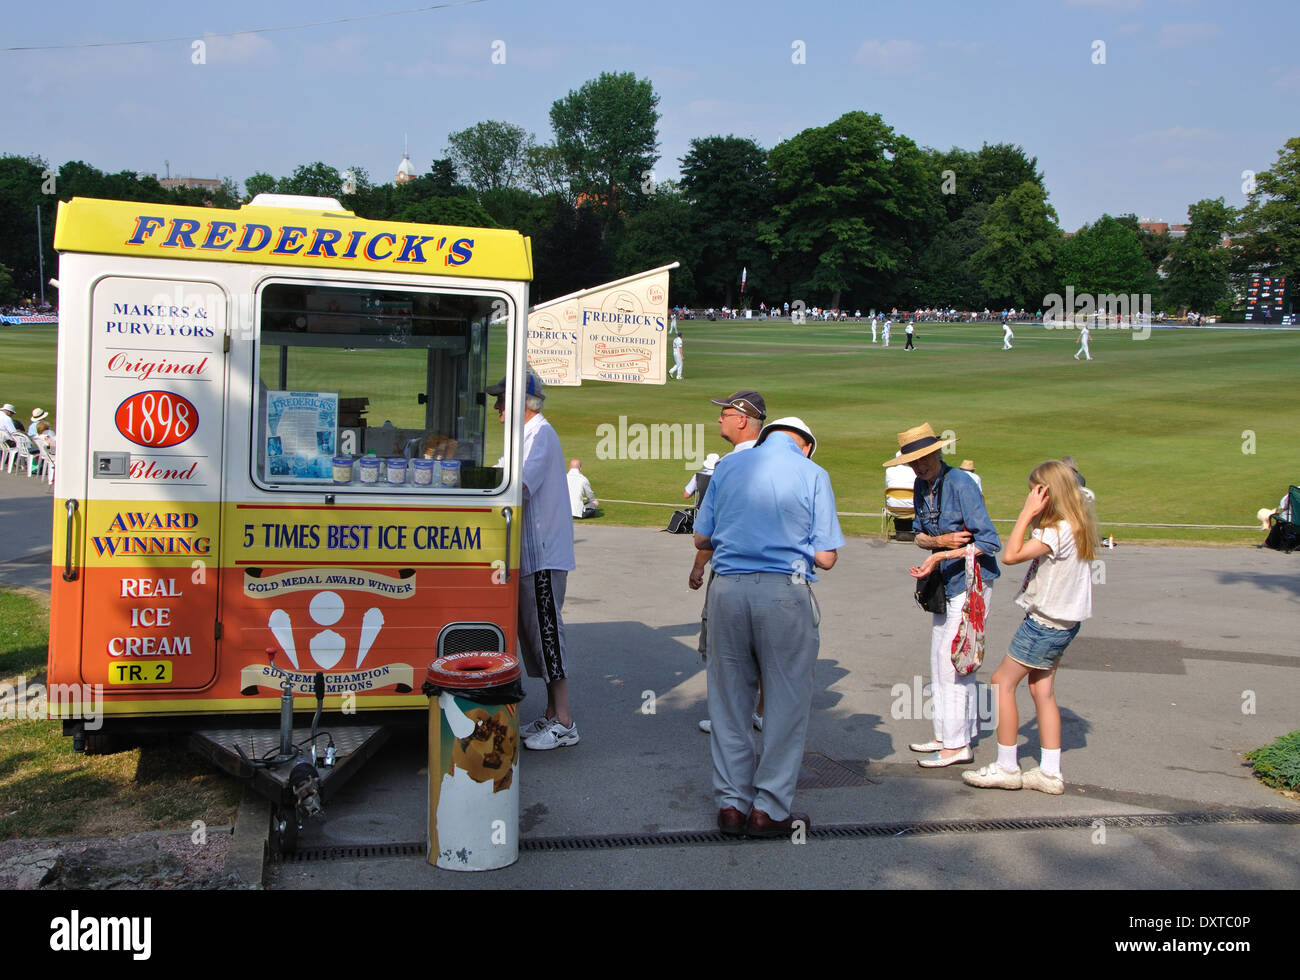 Frederick's ice cream kiosk, Queens Park, Chesterfield, Derbyshire, England, UK Stock Photo